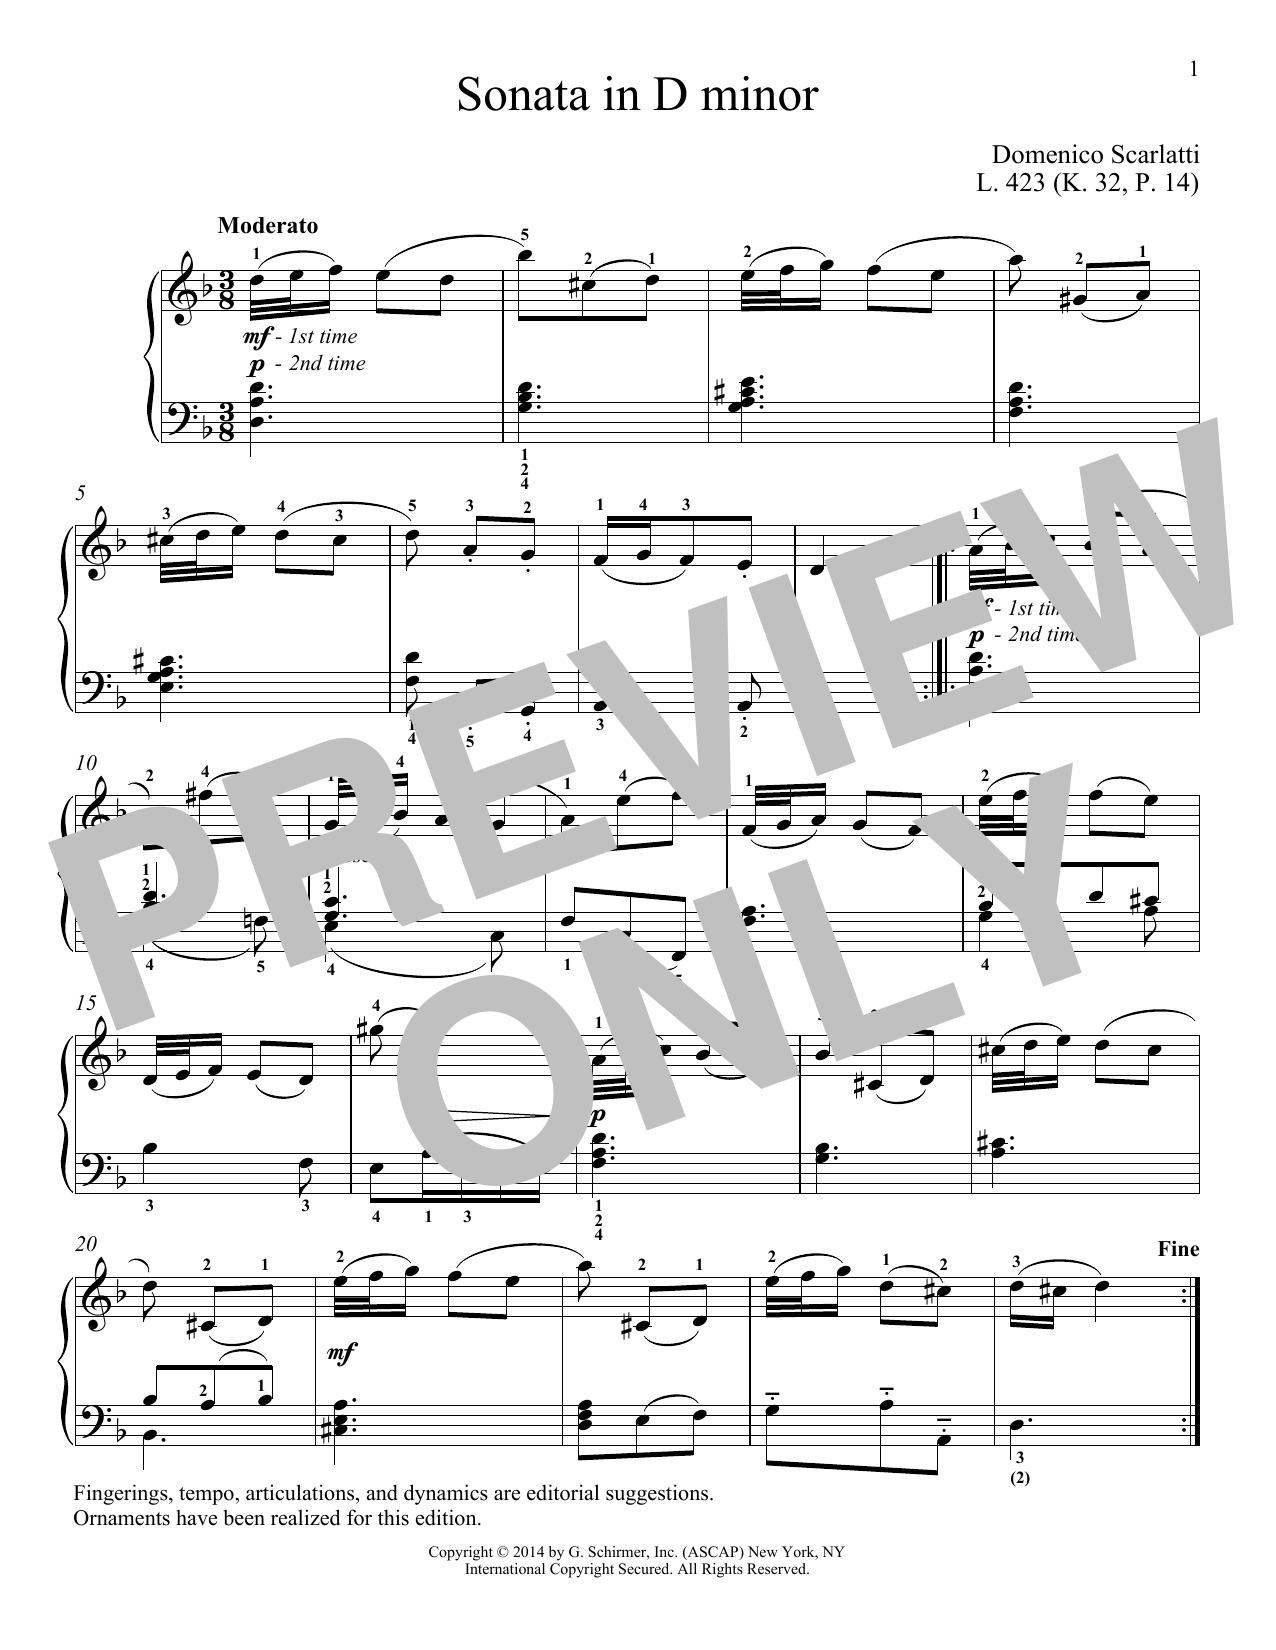 Download Domenico Scarlatti Sonata In D Minor, L. 423 Sheet Music and learn how to play Piano PDF digital score in minutes